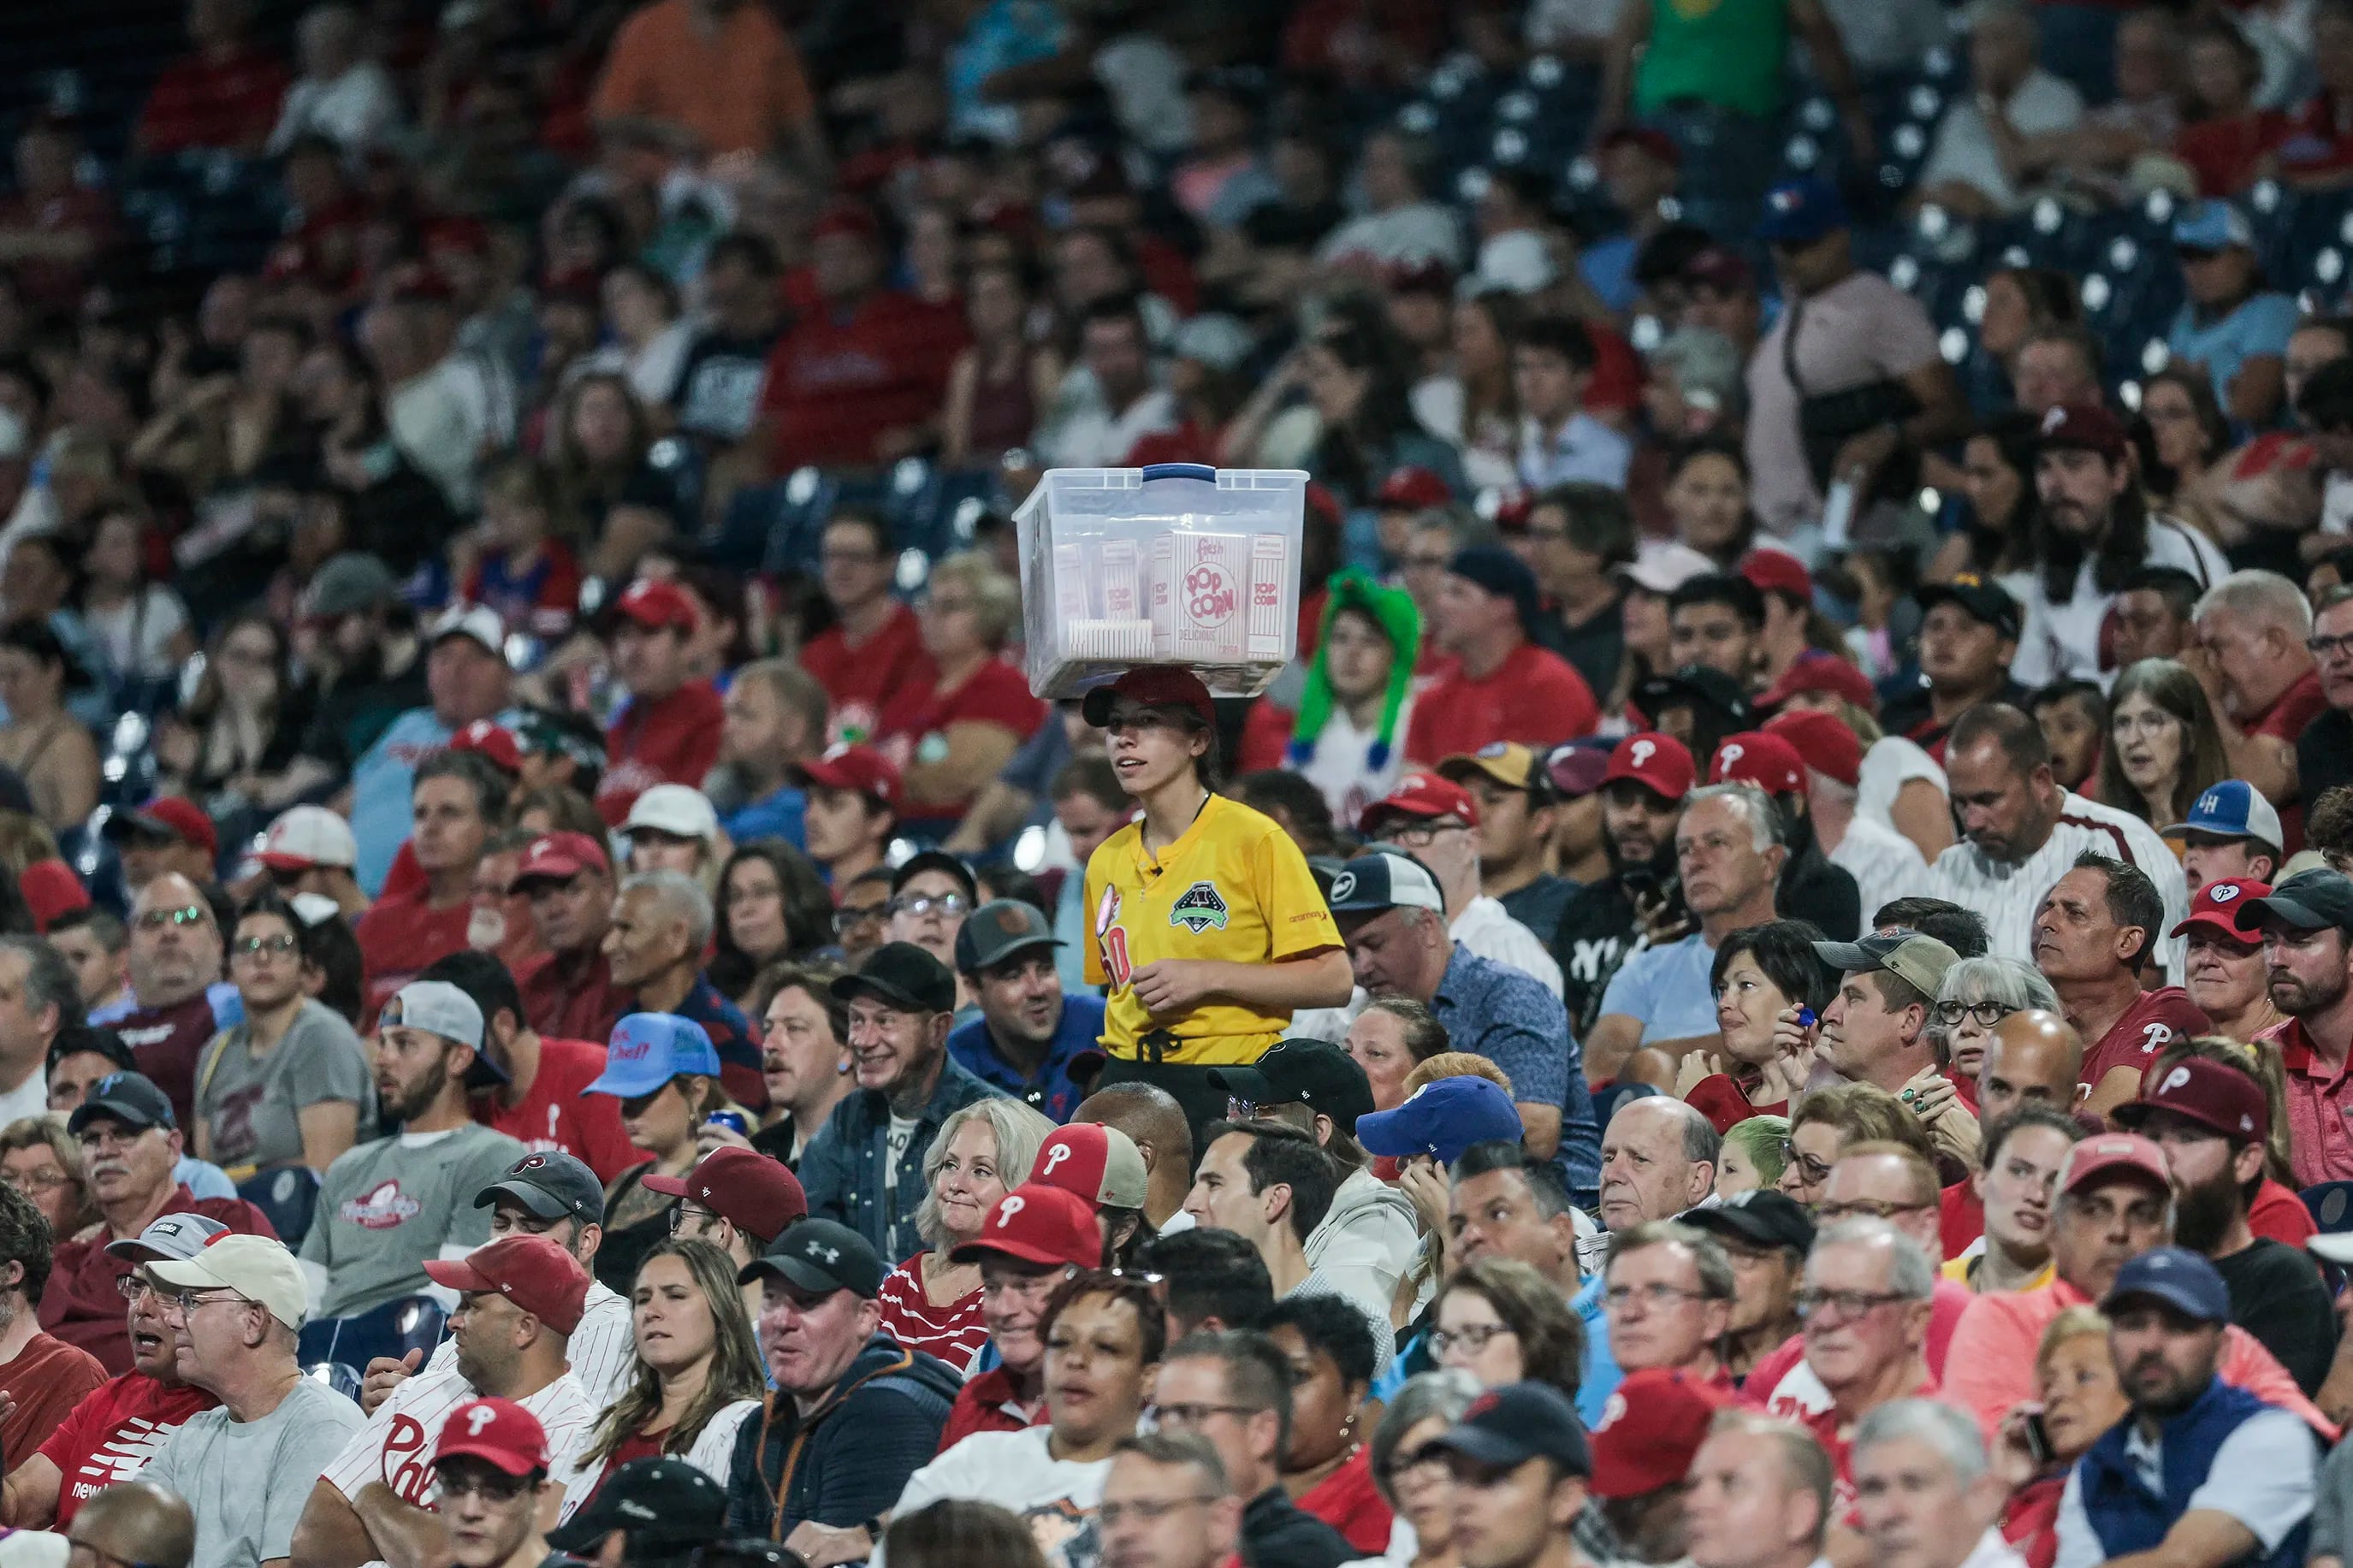 Popcorn vendor turns Phillies games into a balancing act